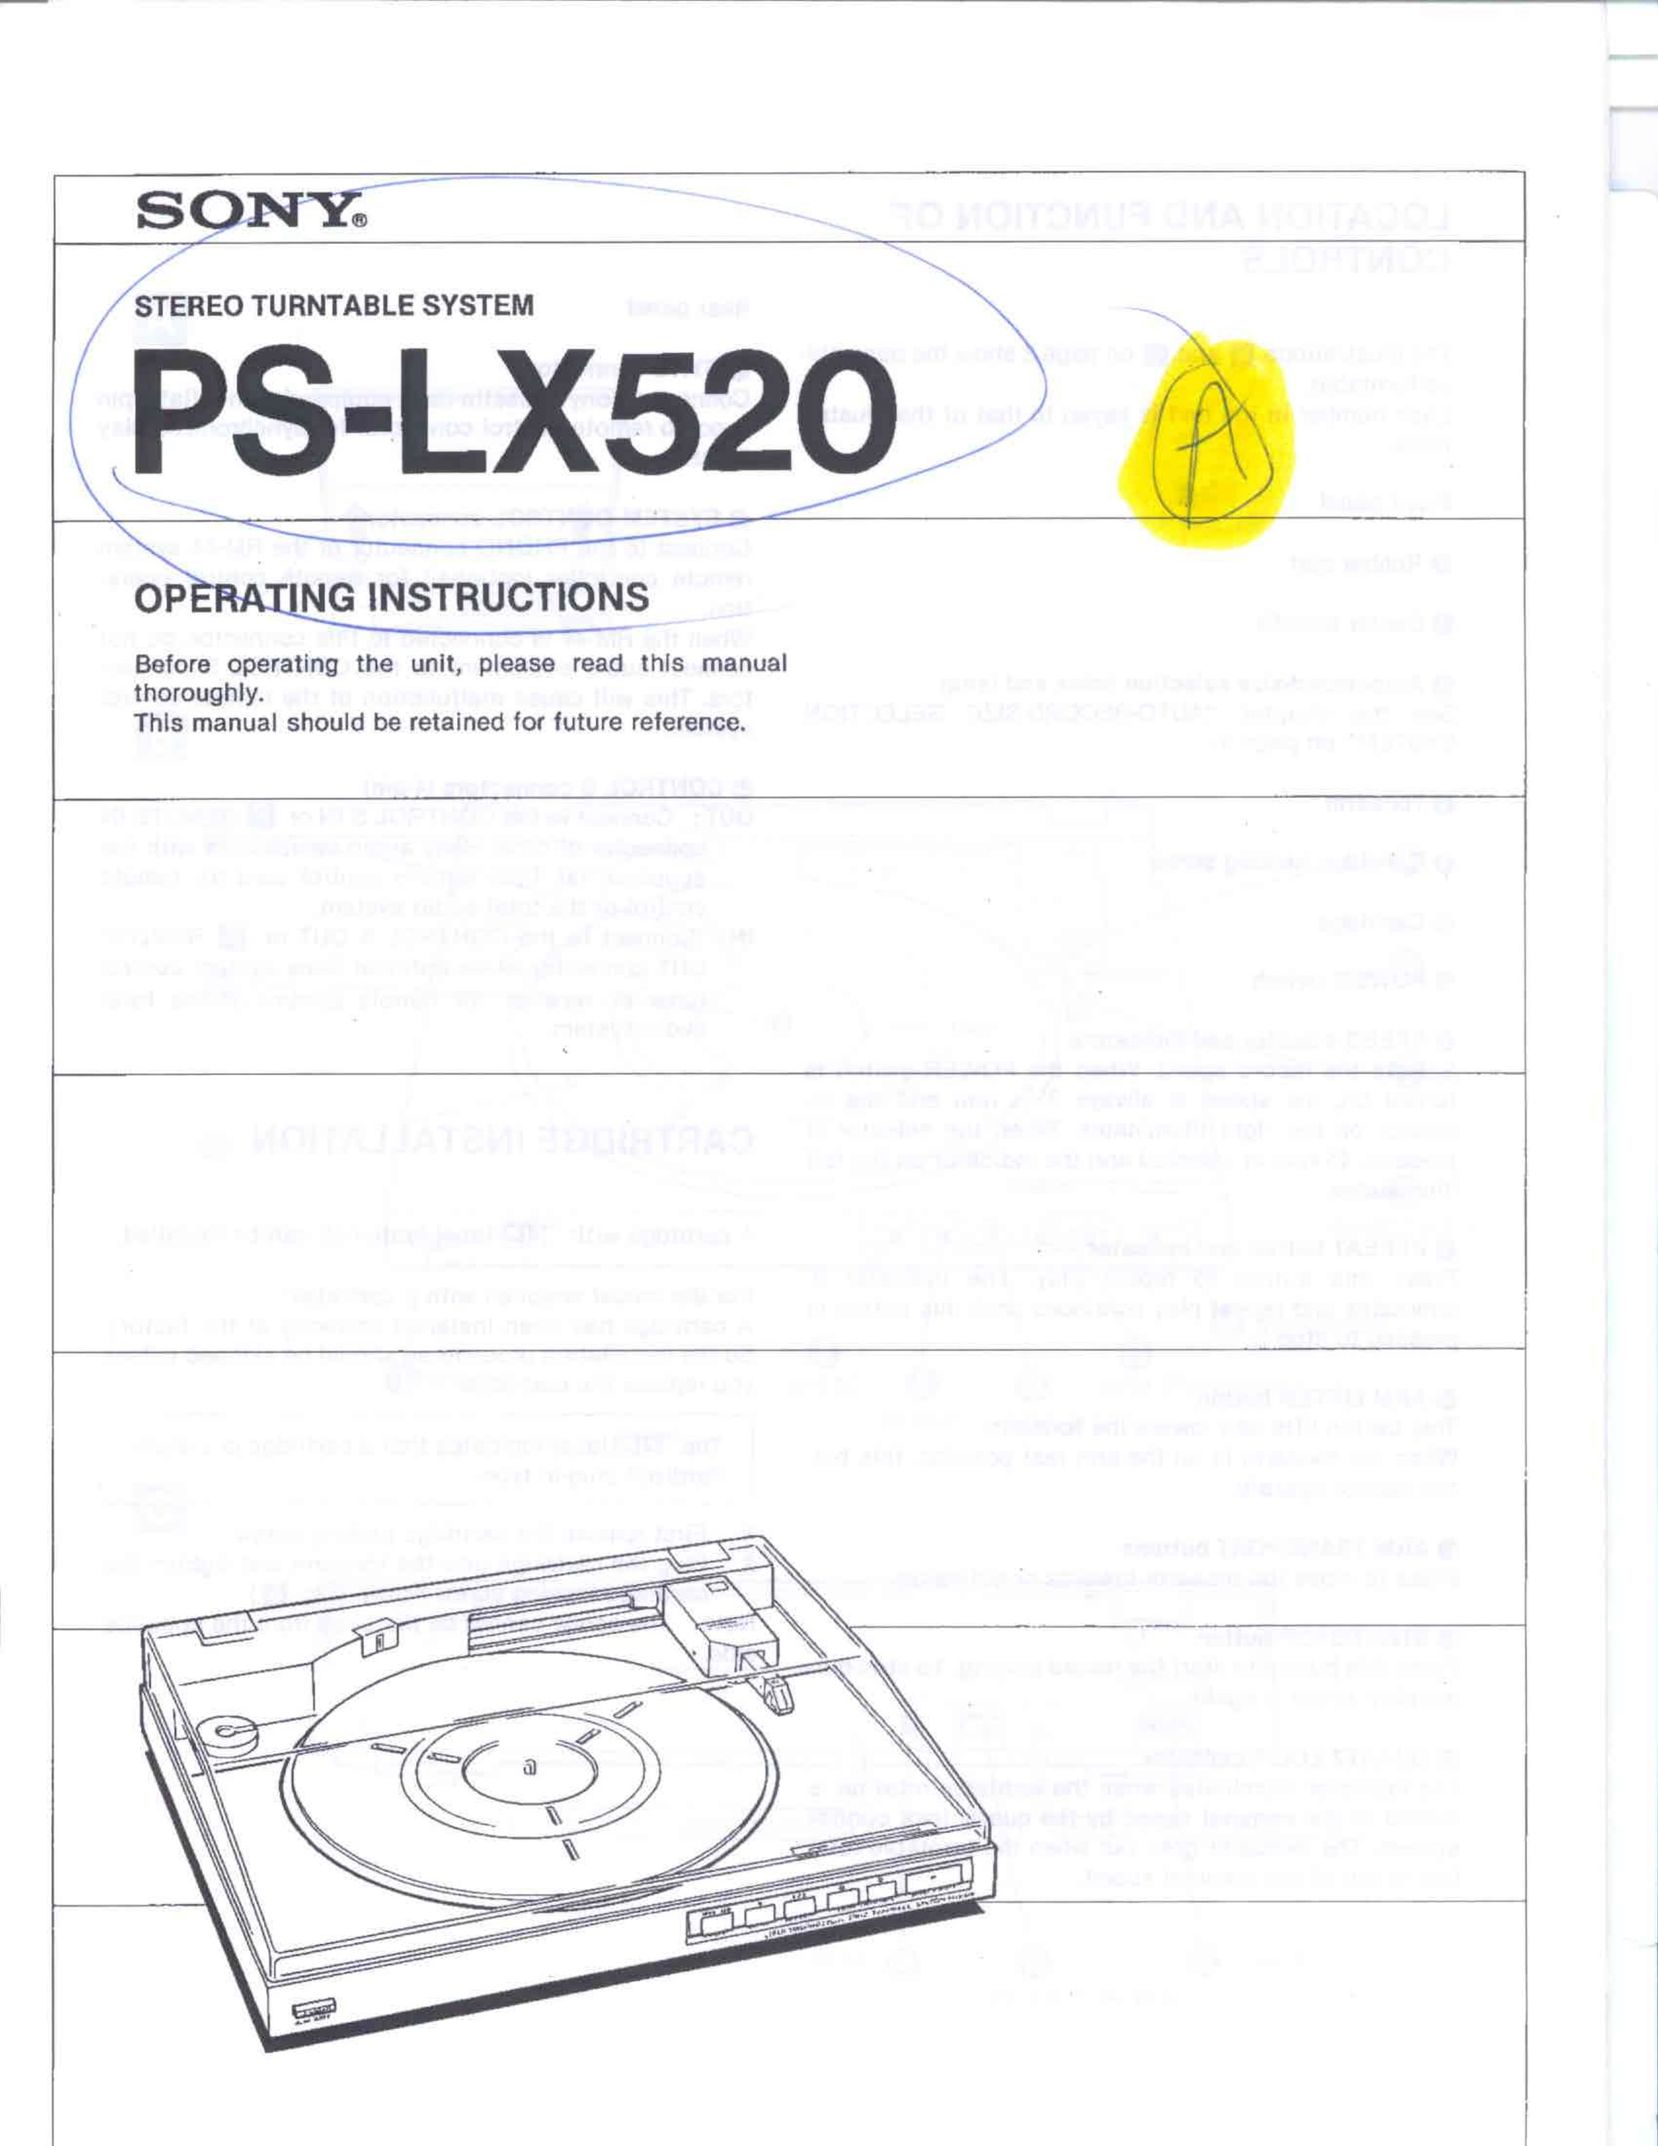 Sony PSLX520 Turntable User Manual